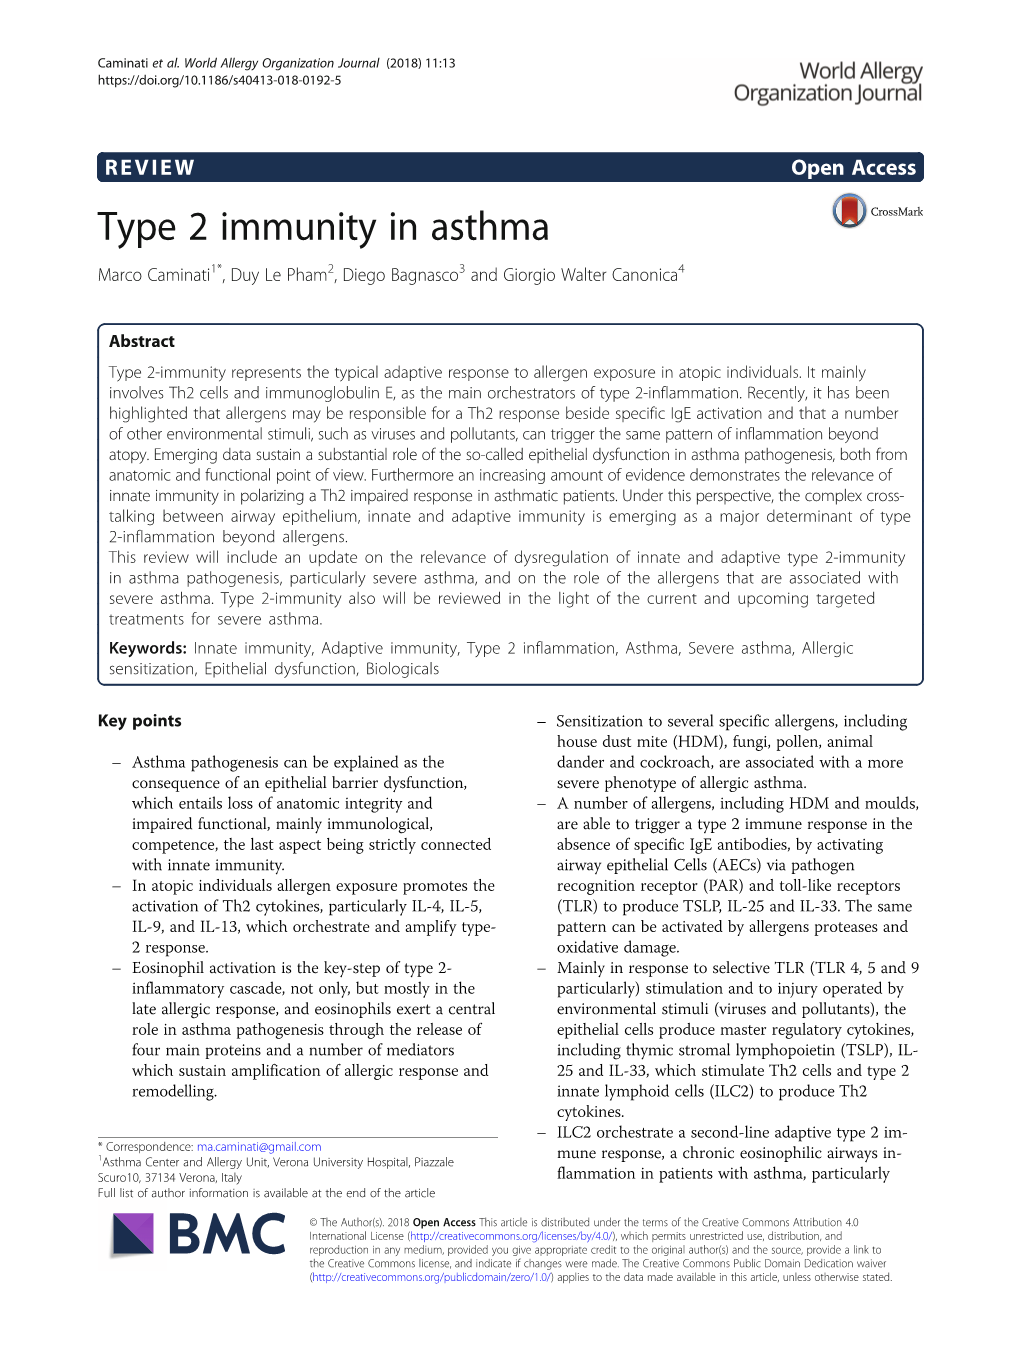 Type 2 Immunity in Asthma Marco Caminati1*, Duy Le Pham2, Diego Bagnasco3 and Giorgio Walter Canonica4